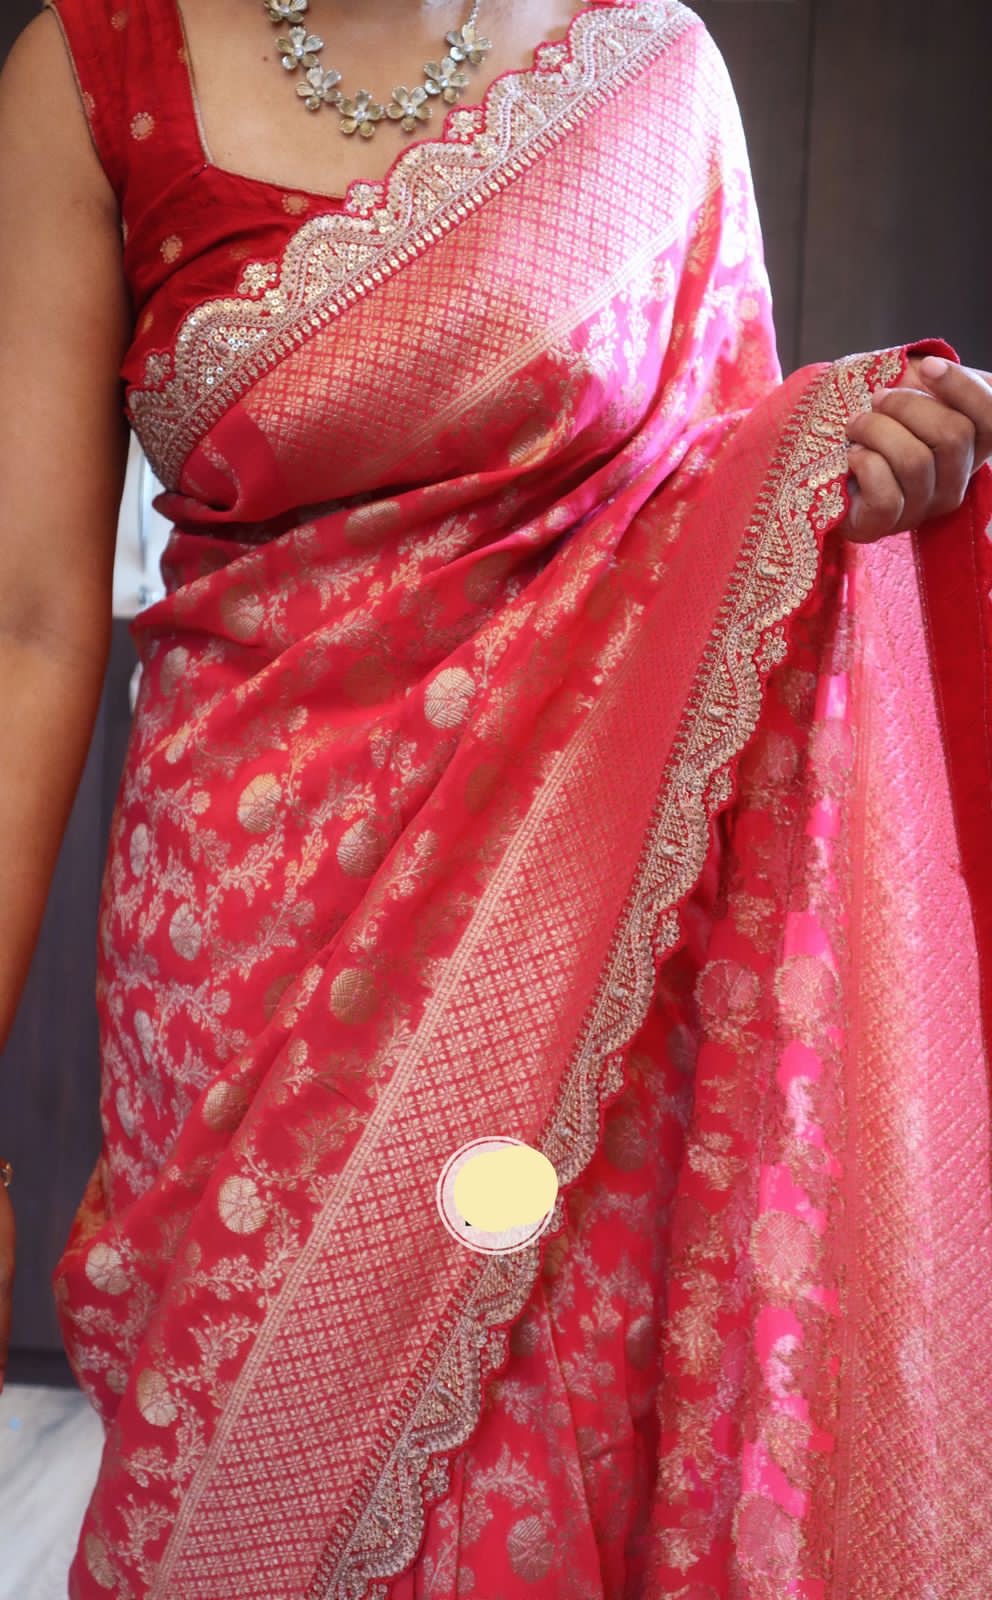 Wedding indd as purée bridal khaddi gorgette saree indian sari